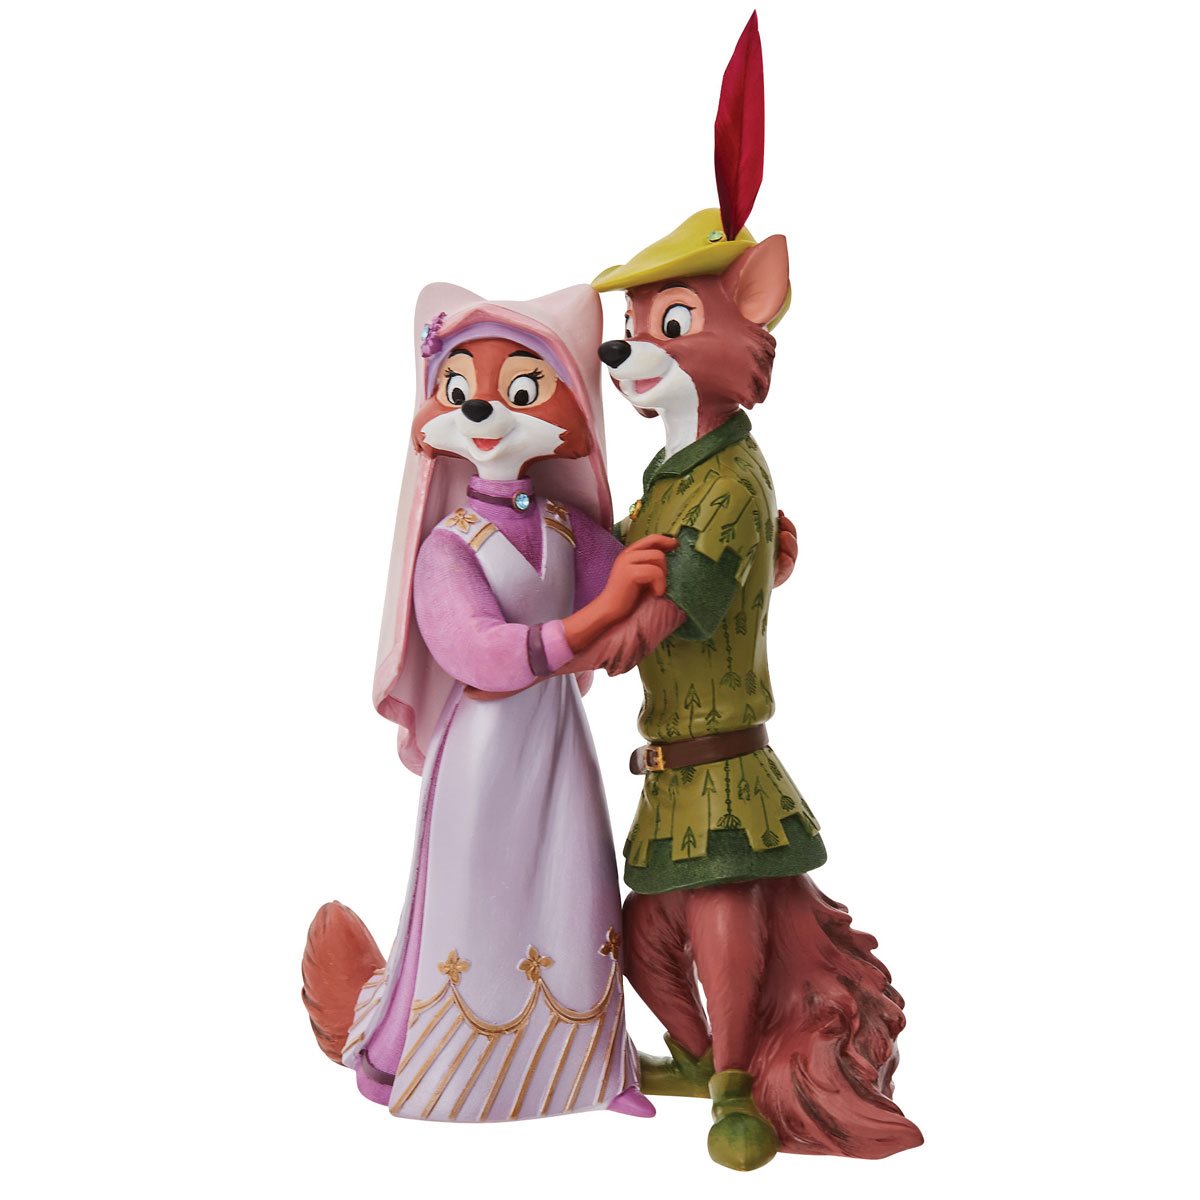 Figure Funko POP! Disney: Robin Hood - Maid Marian #1438 